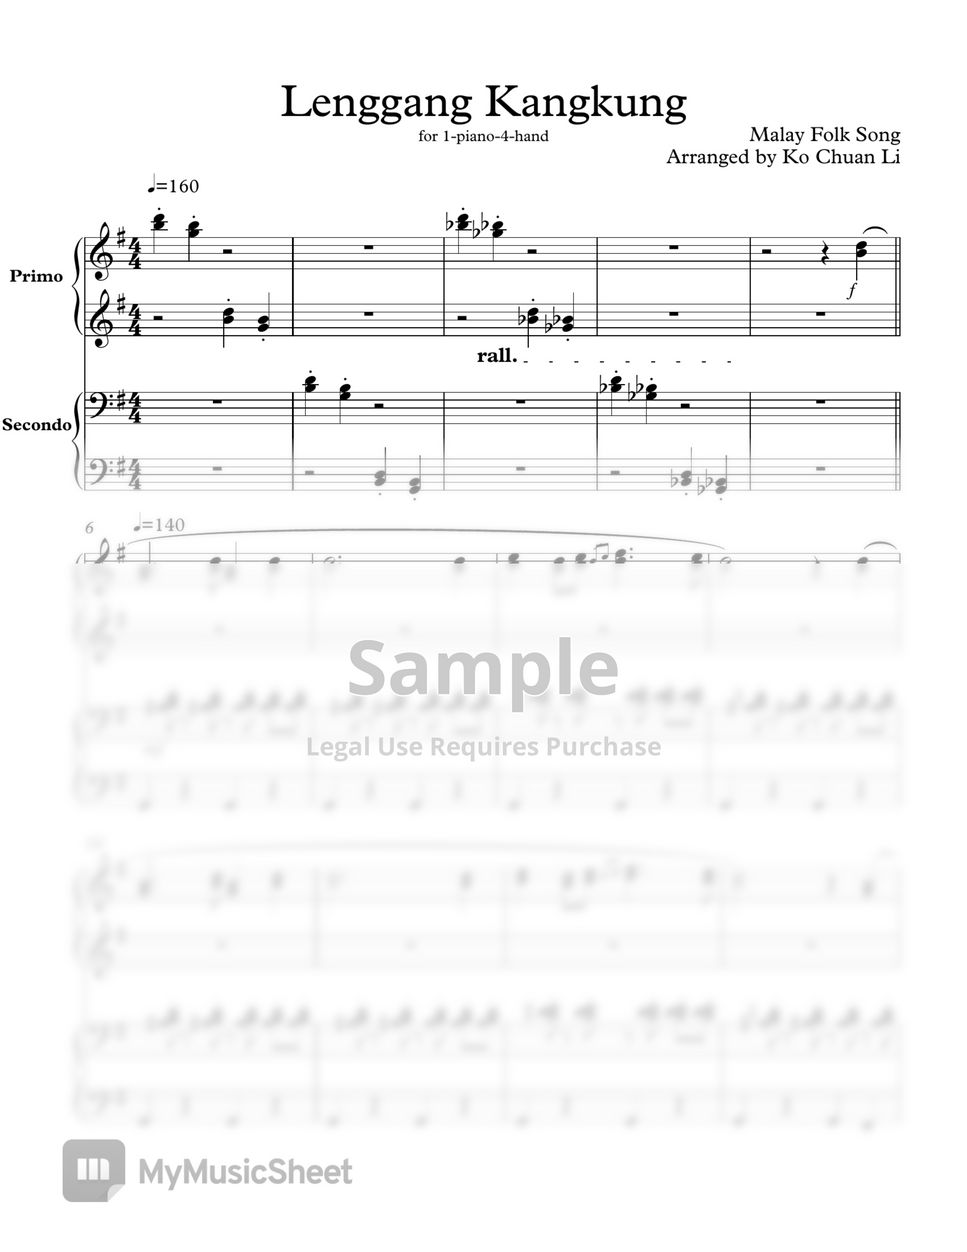 Malaysian folk tune - Lenggang Kangkung for 1 piano 4 hands by Chuan-Li Ko